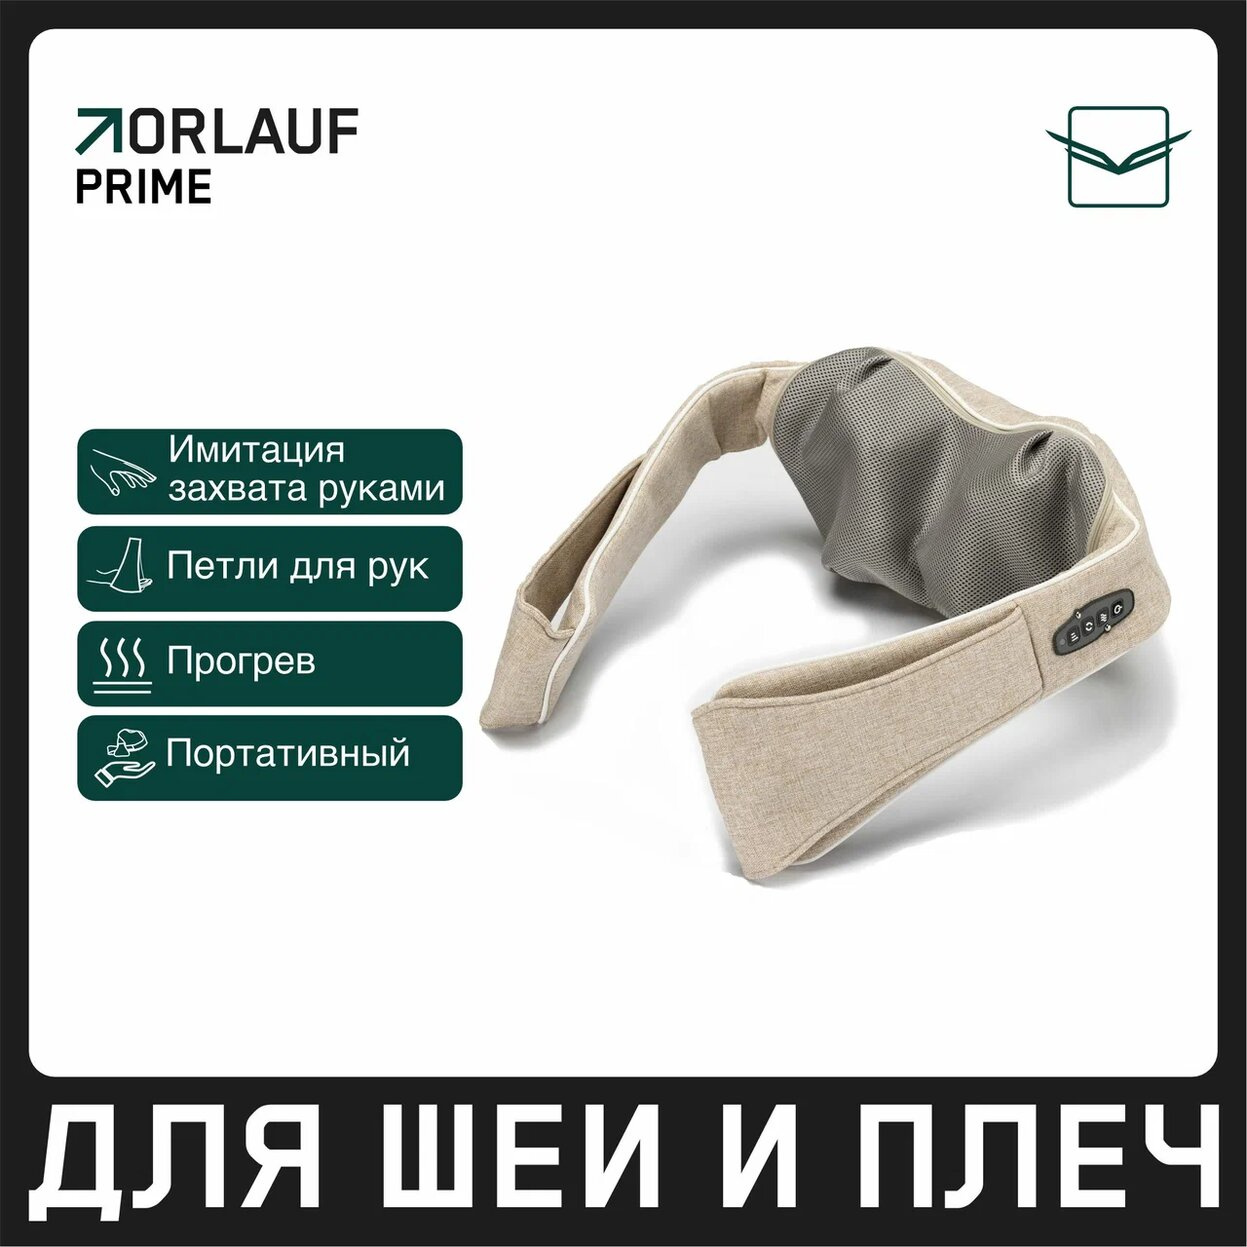 Orlauf Prime из каталога устройств для массажа в Санкт-Петербурге по цене 11900 ₽